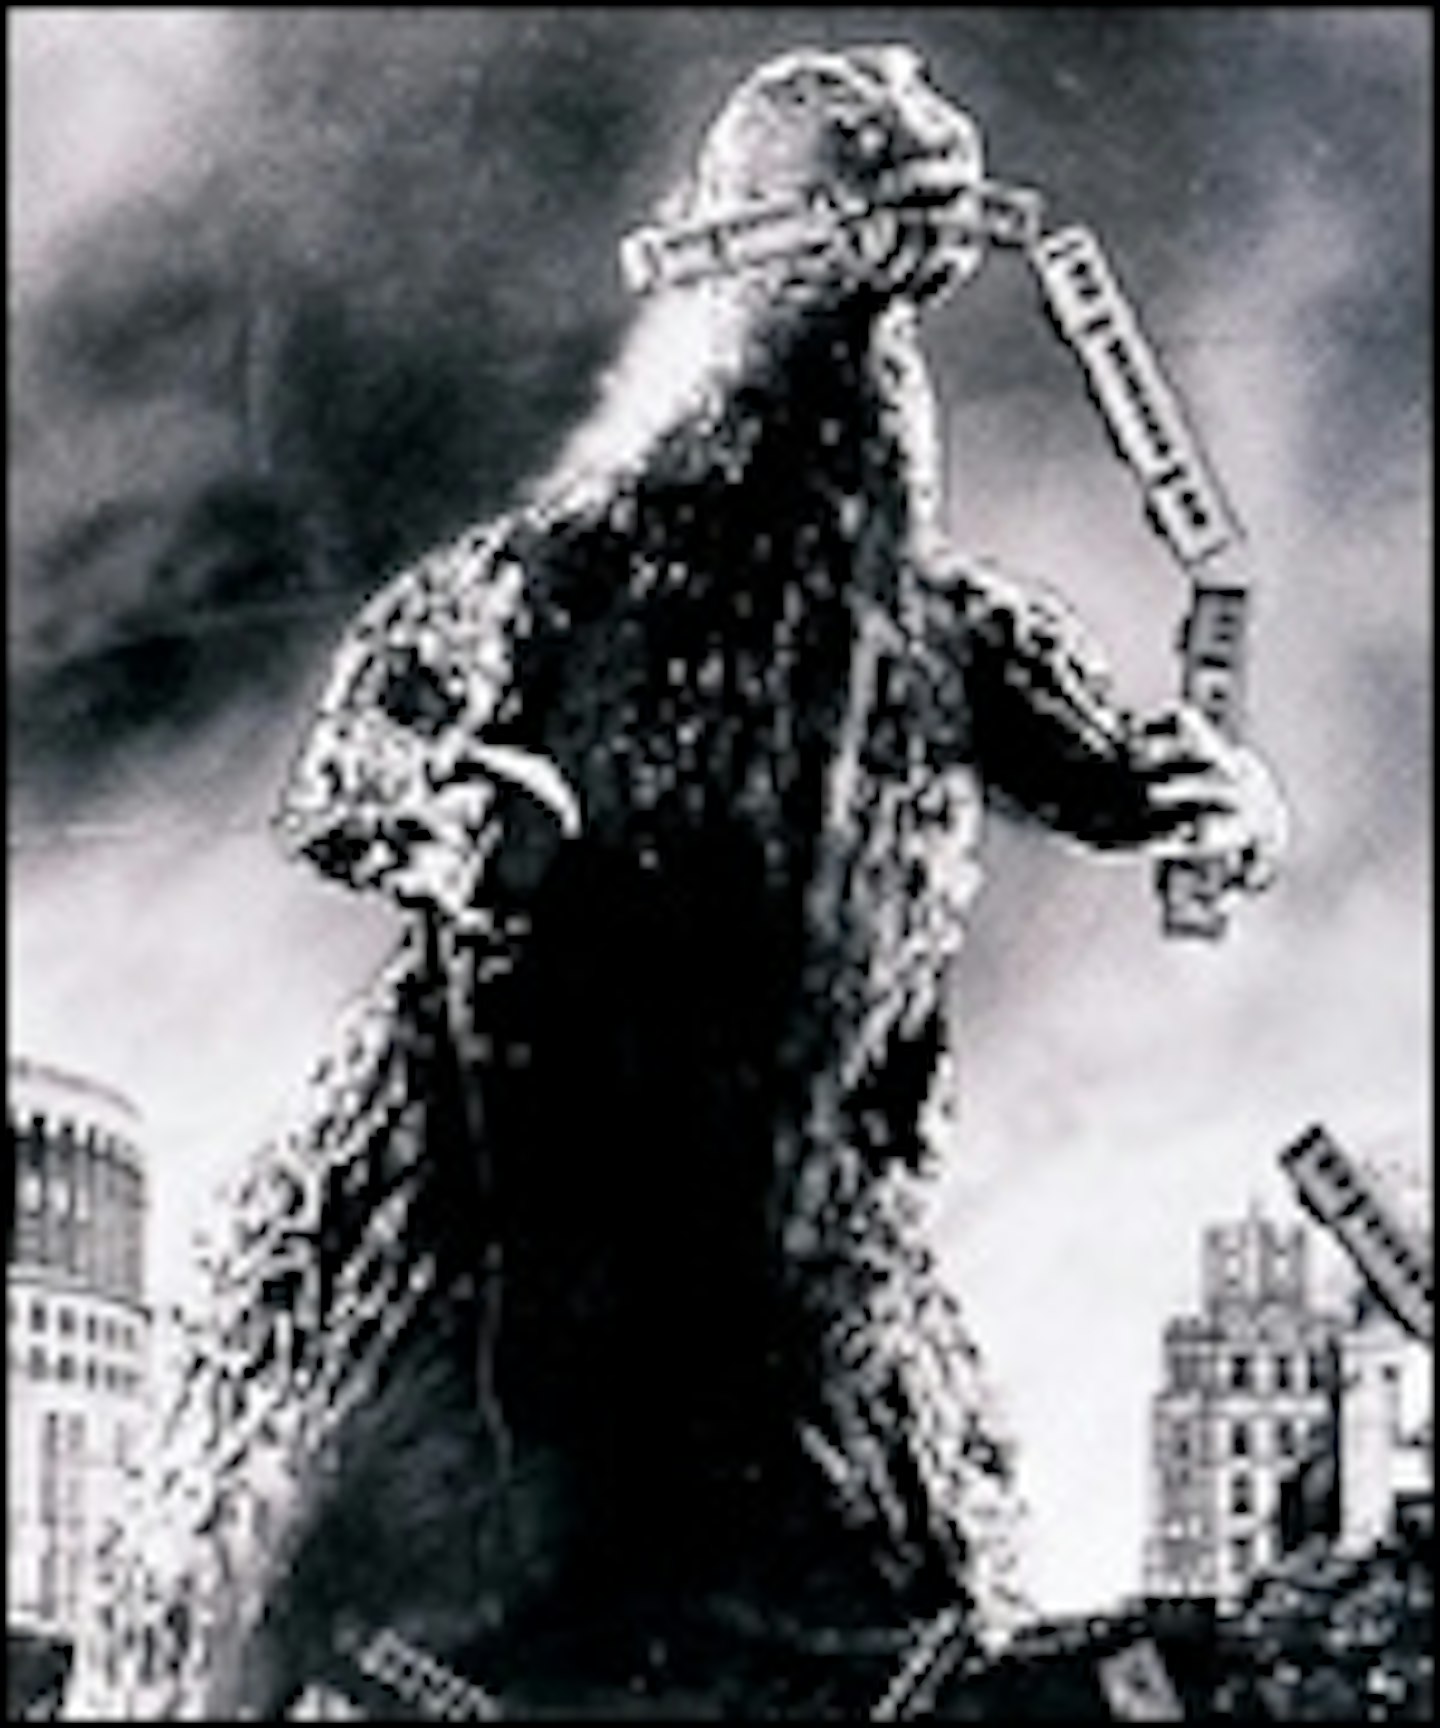 Toho Plans New Godzilla